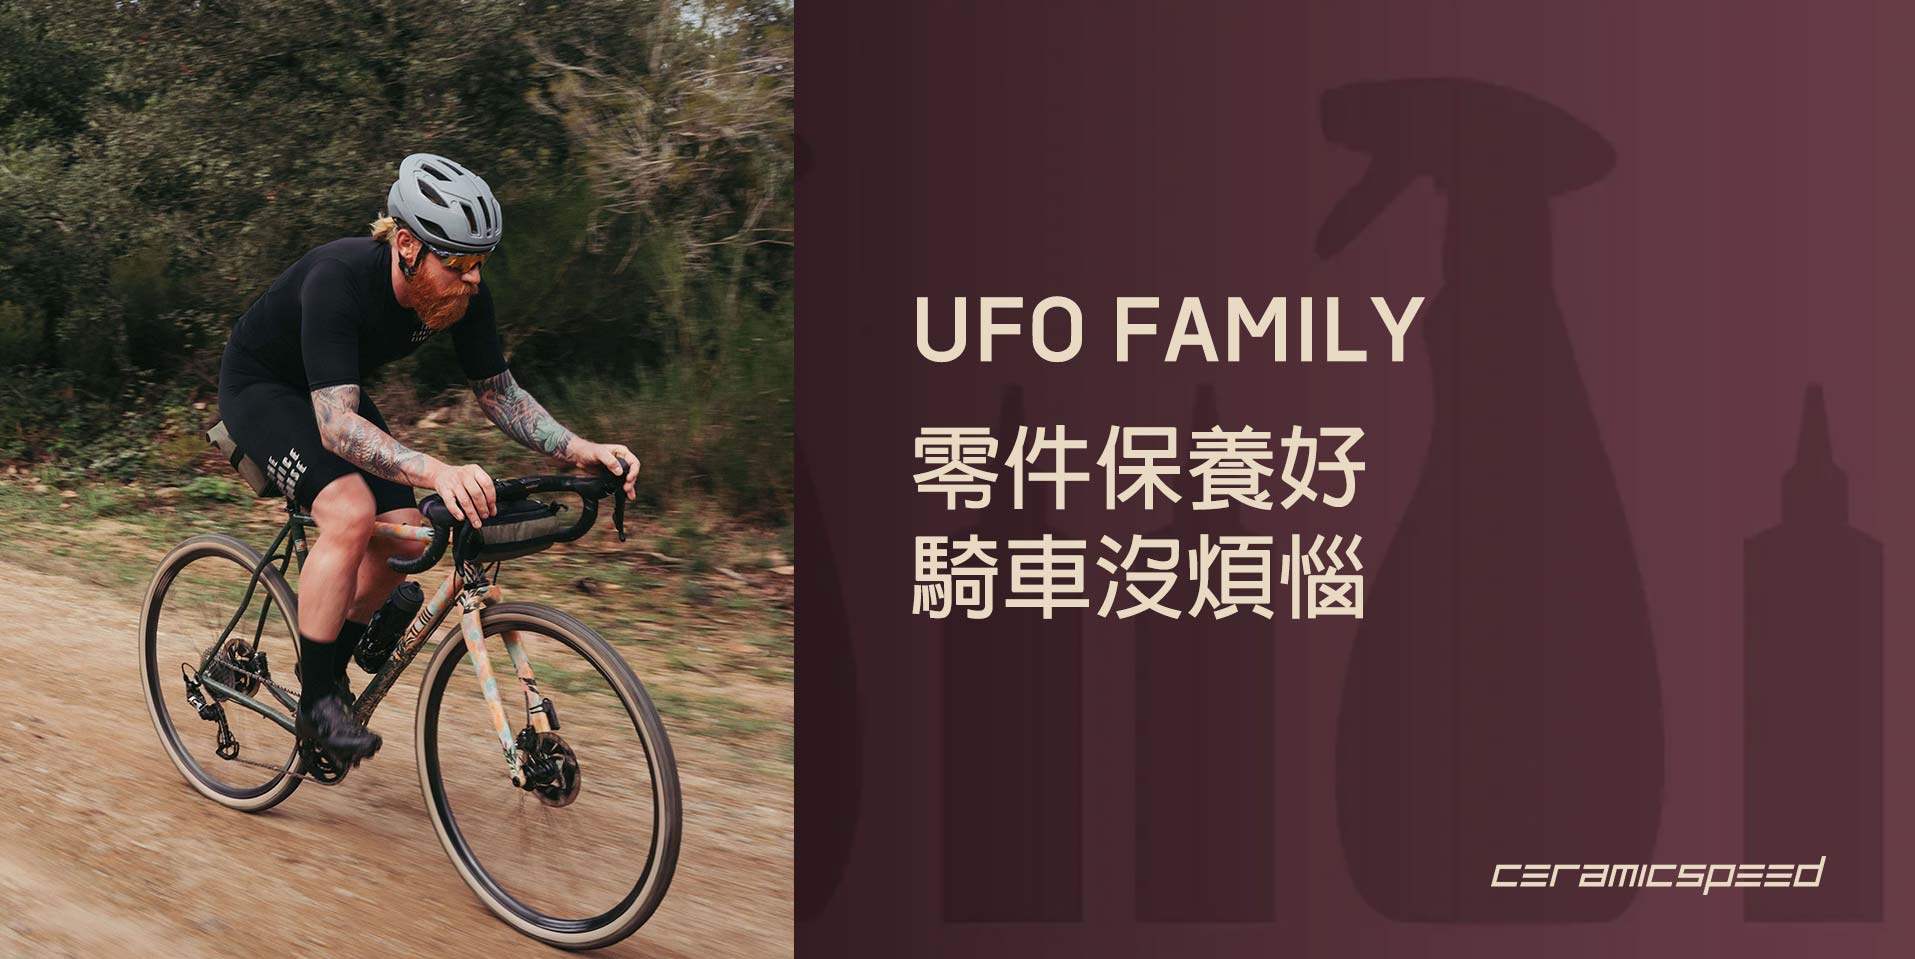 Ceramicspeed UFO Family